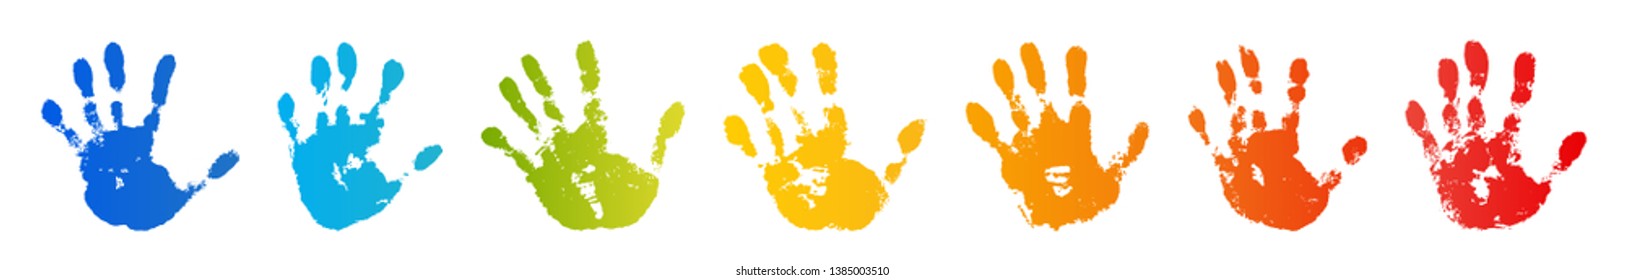 Image result for kids hand print%22